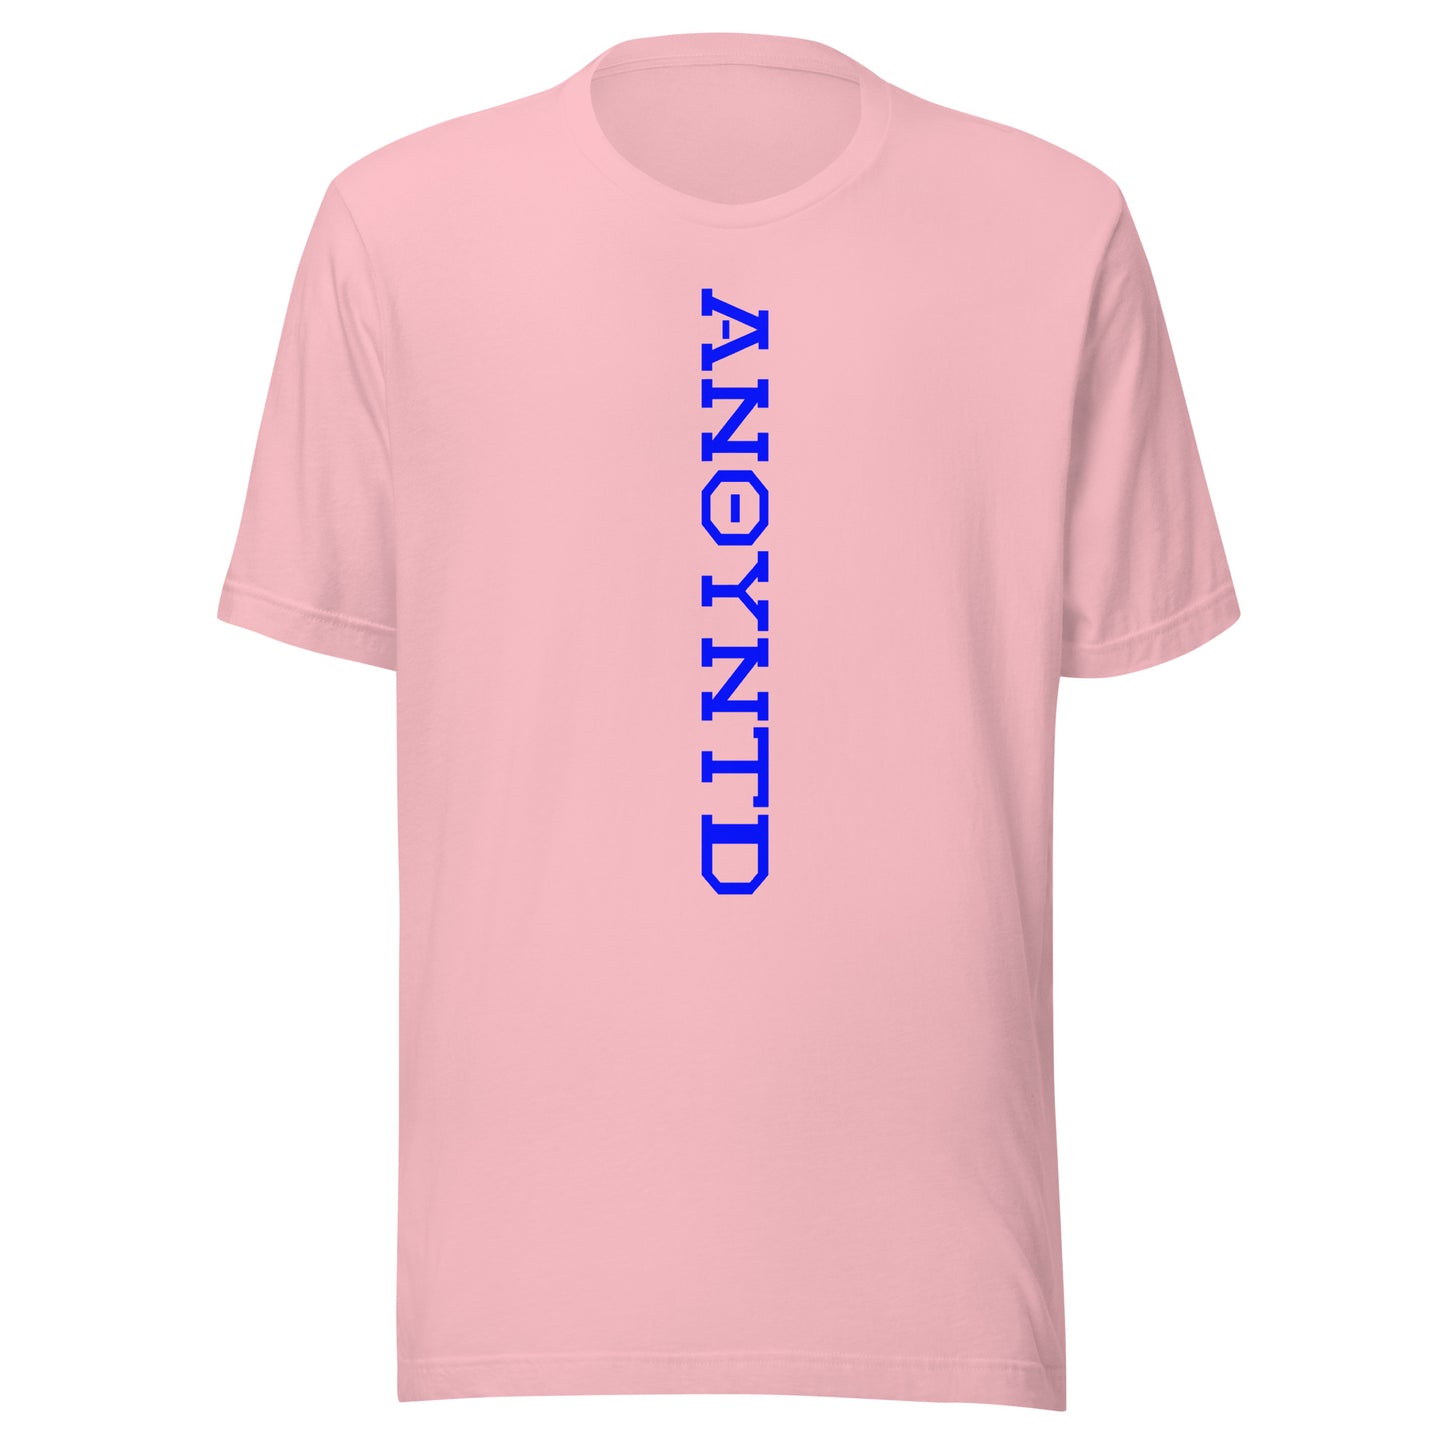 ANOYNTD Letterman (Bl) Unisex t-shirt